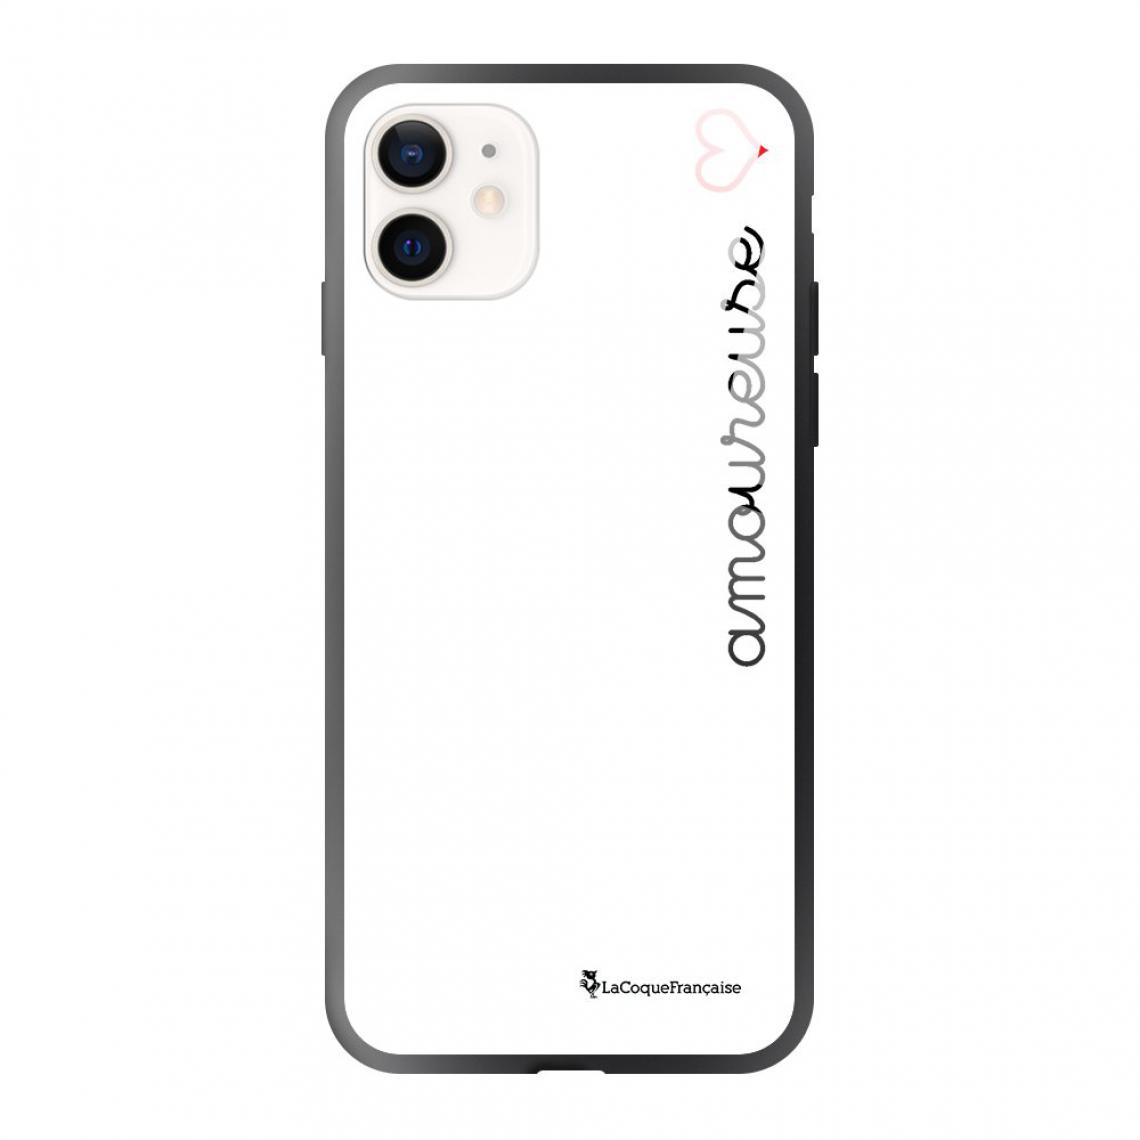 La Coque Francaise - Coque iPhone 12 Mini soft touch effet glossy - Coque, étui smartphone